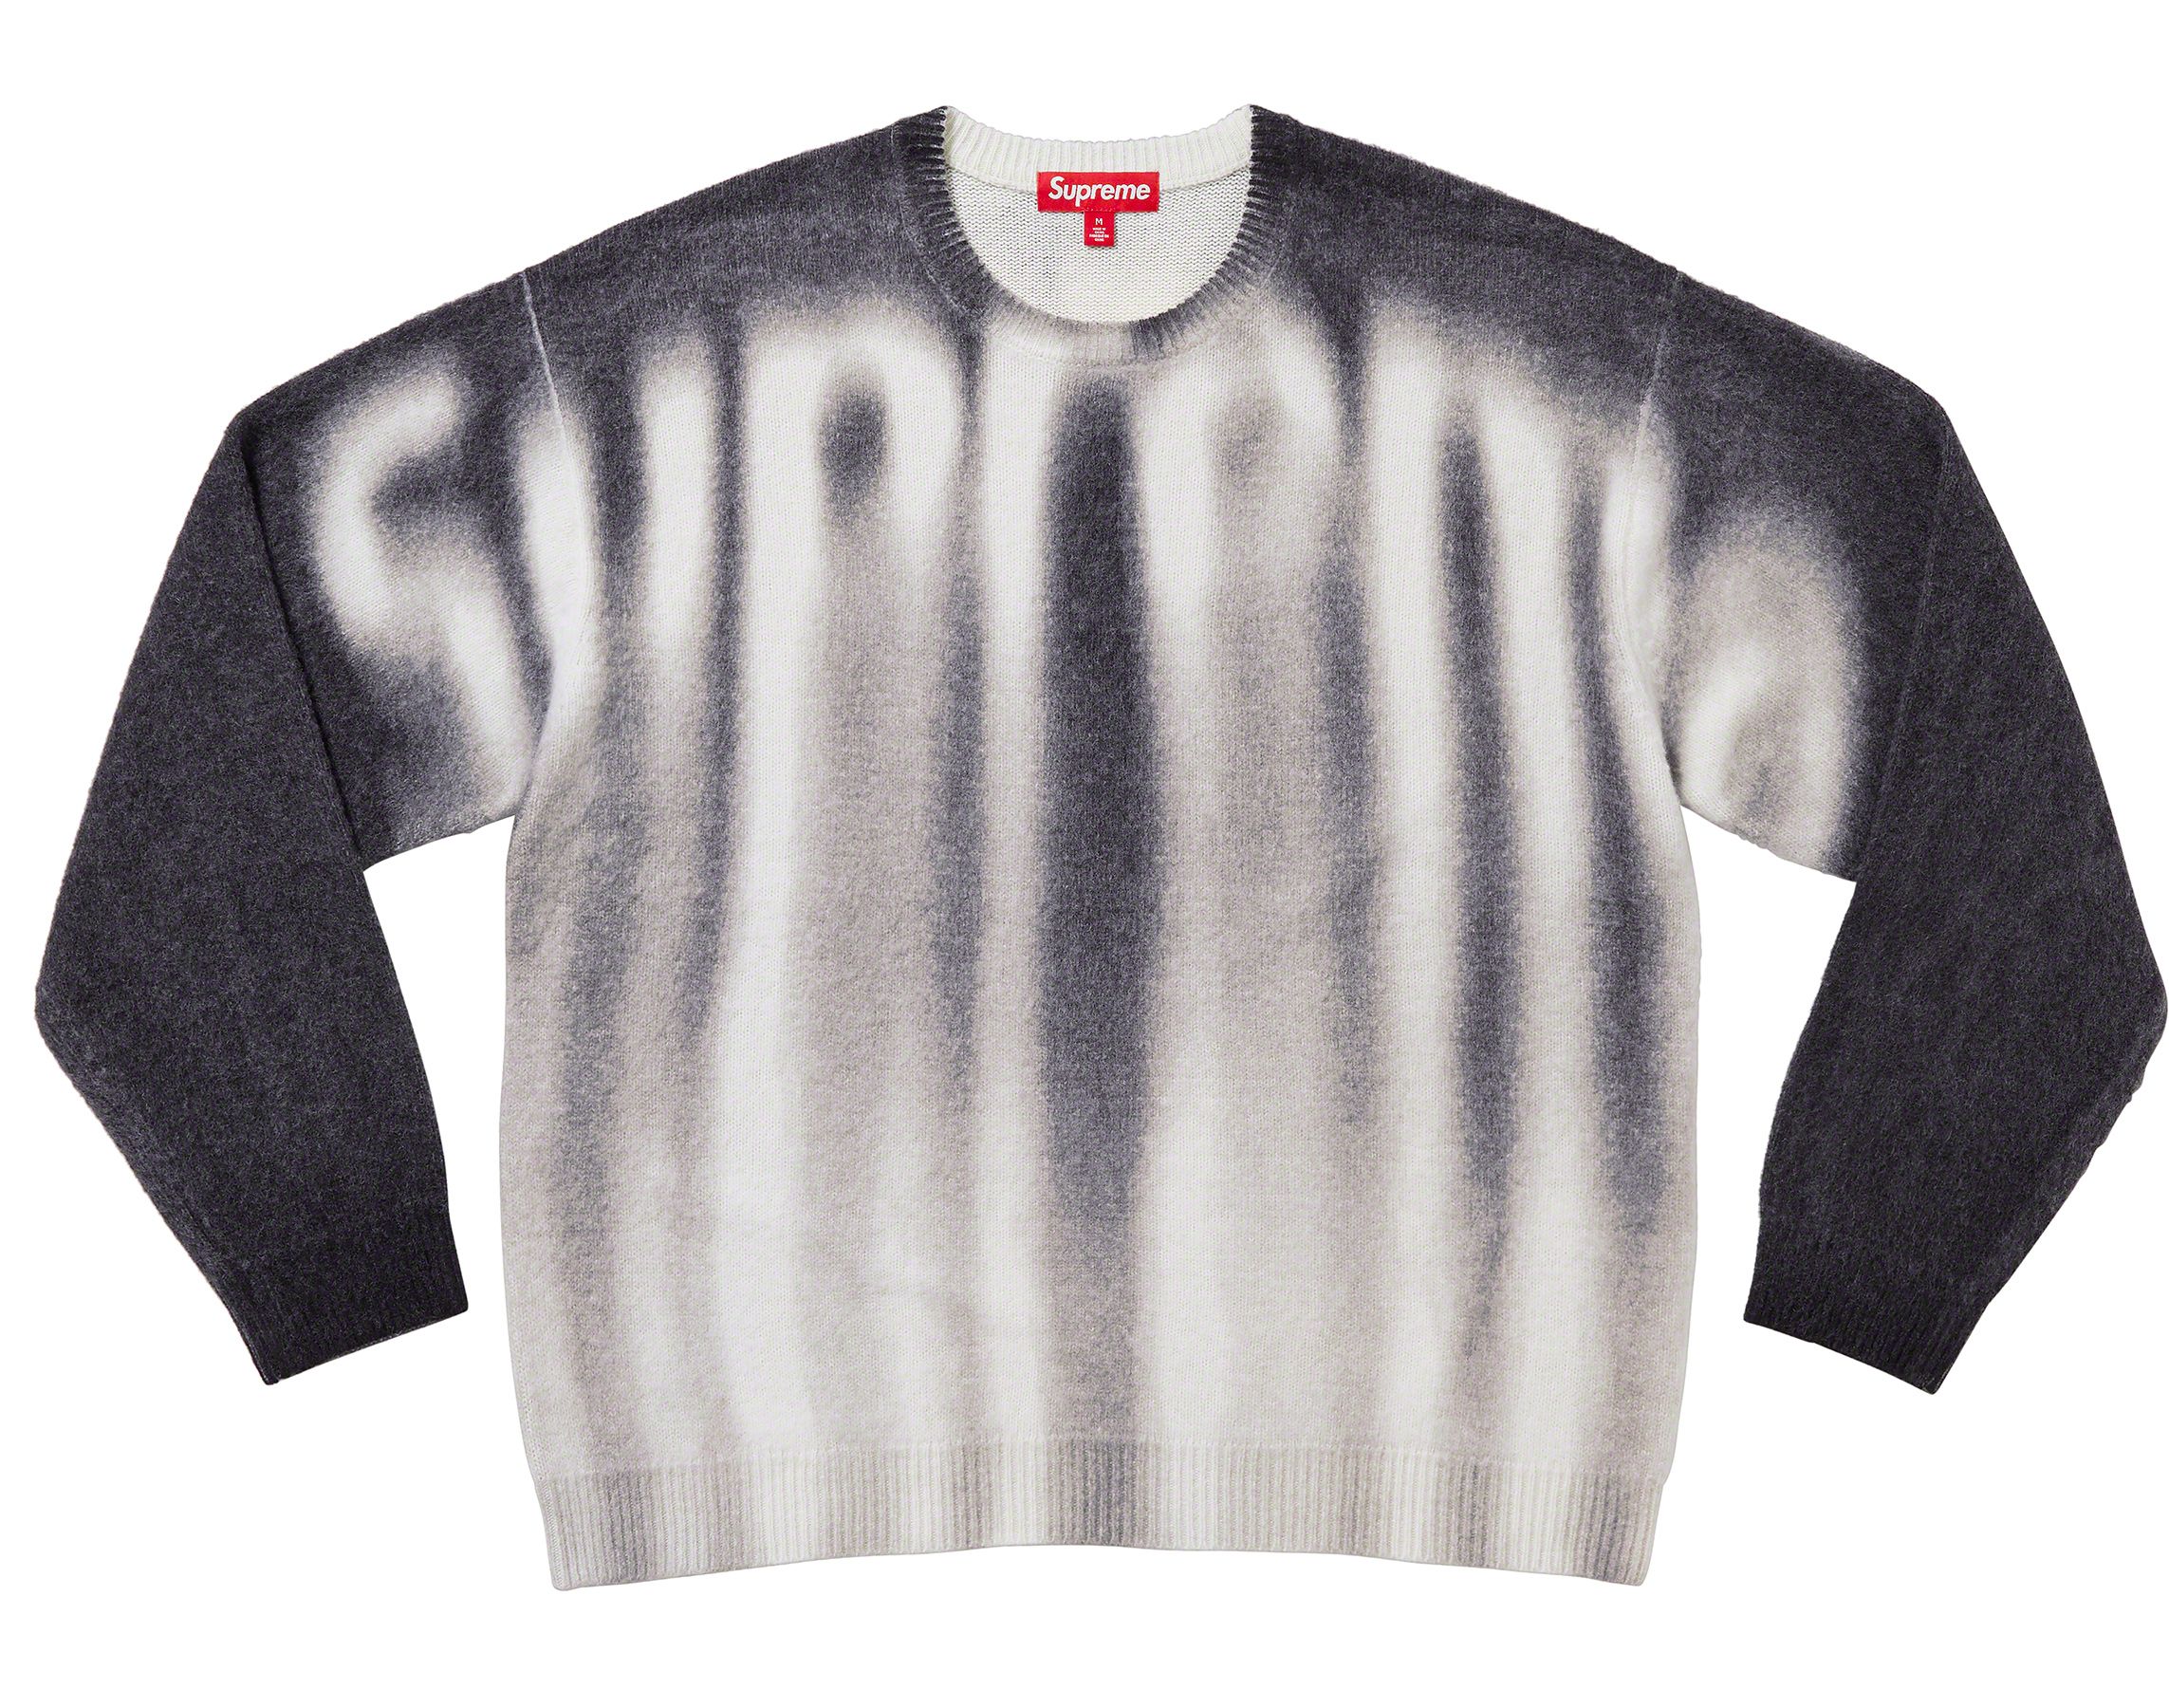 supreme Blurred Logo sweater 早い者勝ち❗️オンライン購入の為